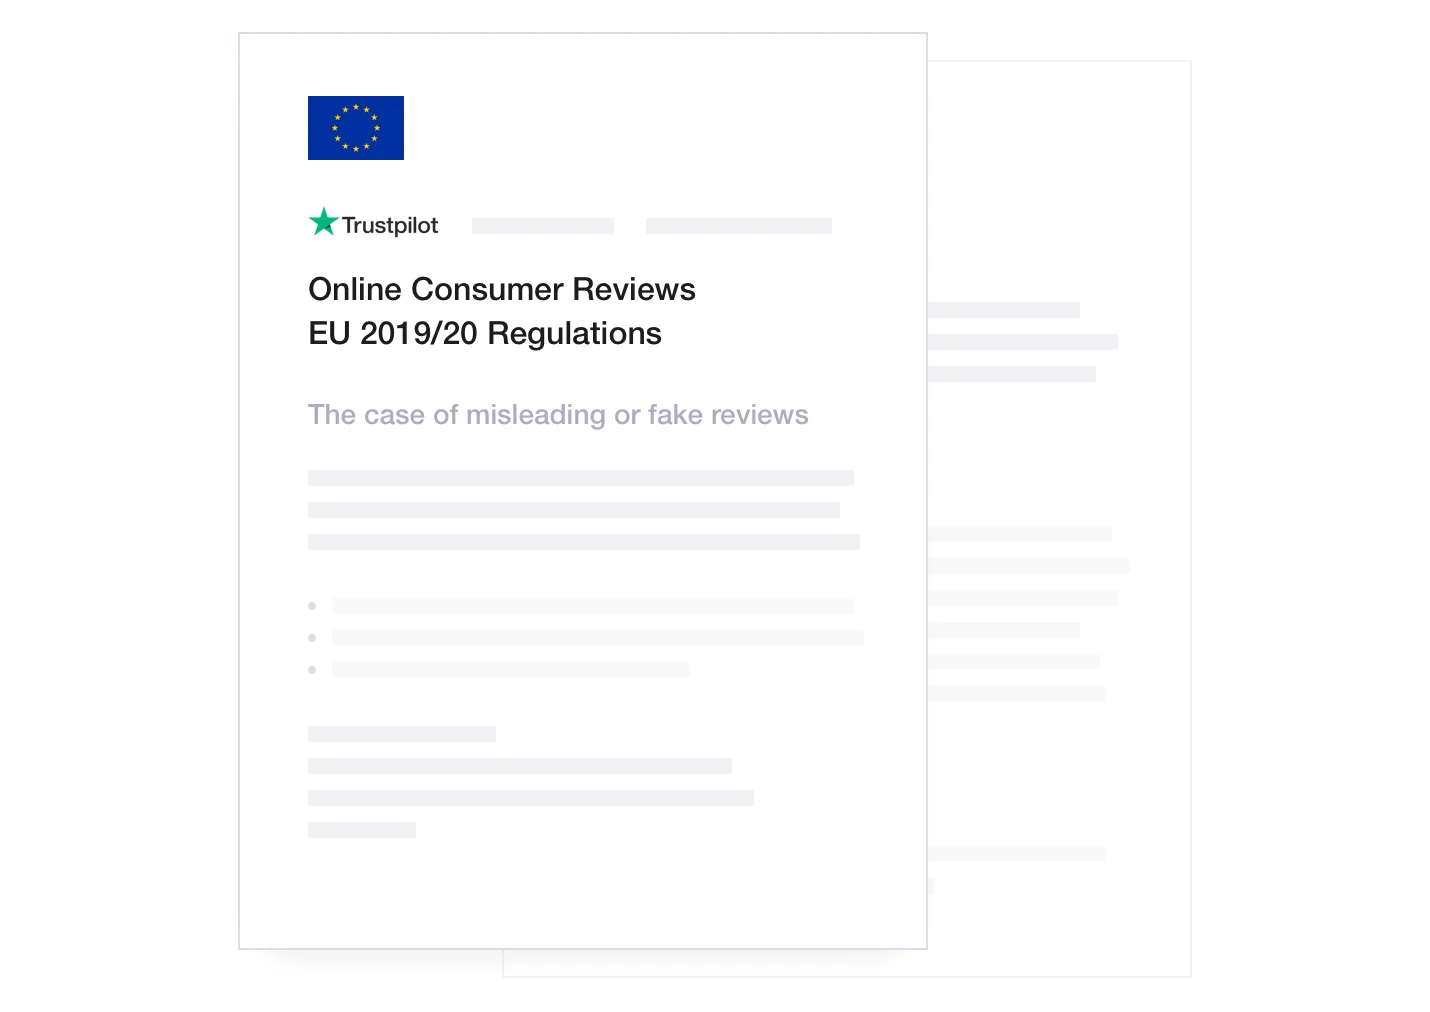 Trustpilot compliance to EU Regulations